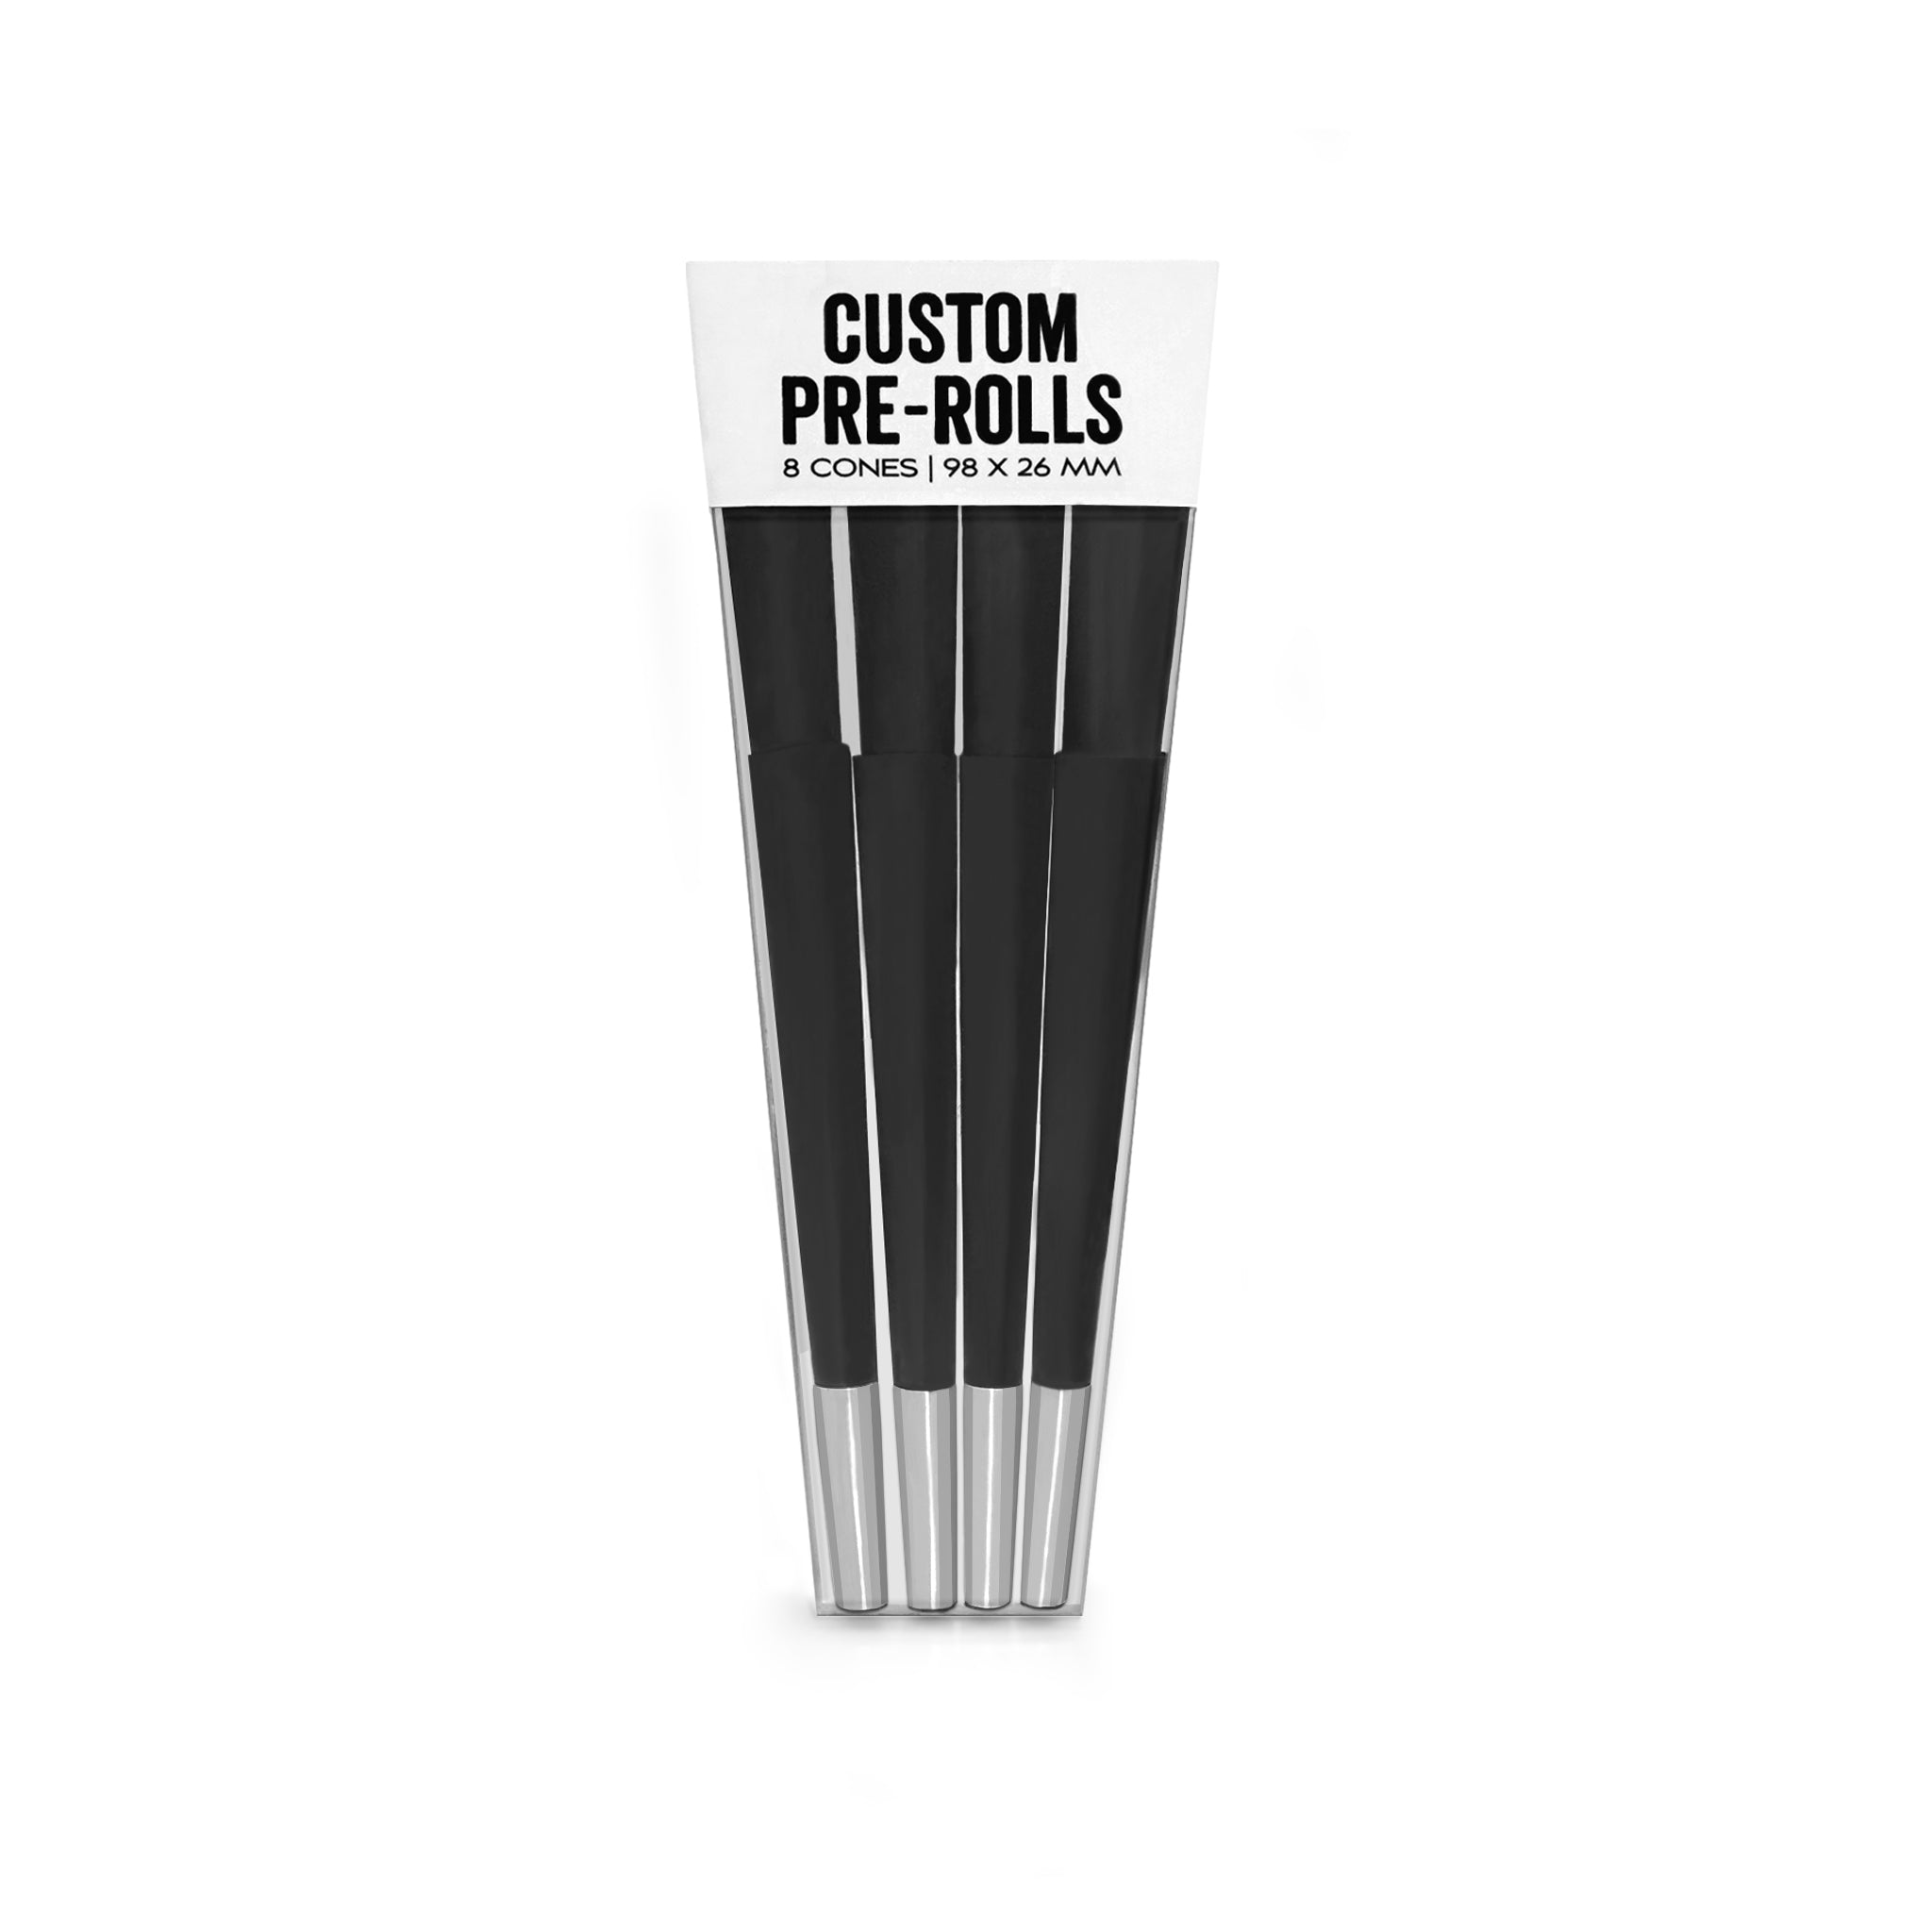 Custom Pre Rolled Cones Printing on Papers in Acetate Box Packaging (8CT)